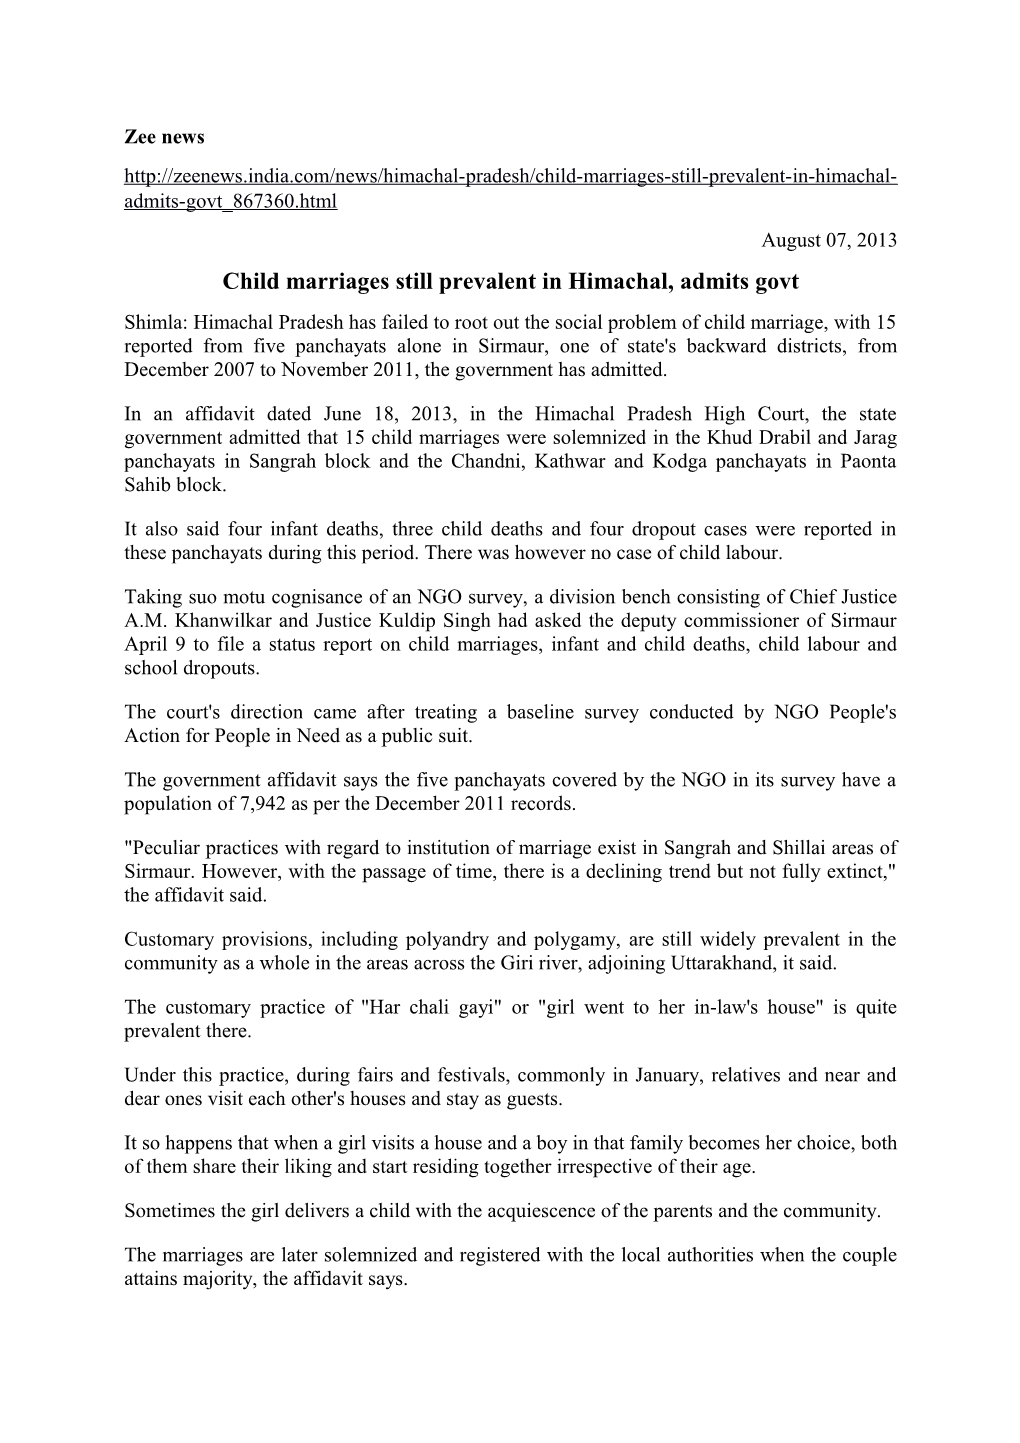 Child Marriages Still Prevalent in Himachal, Admits Govt